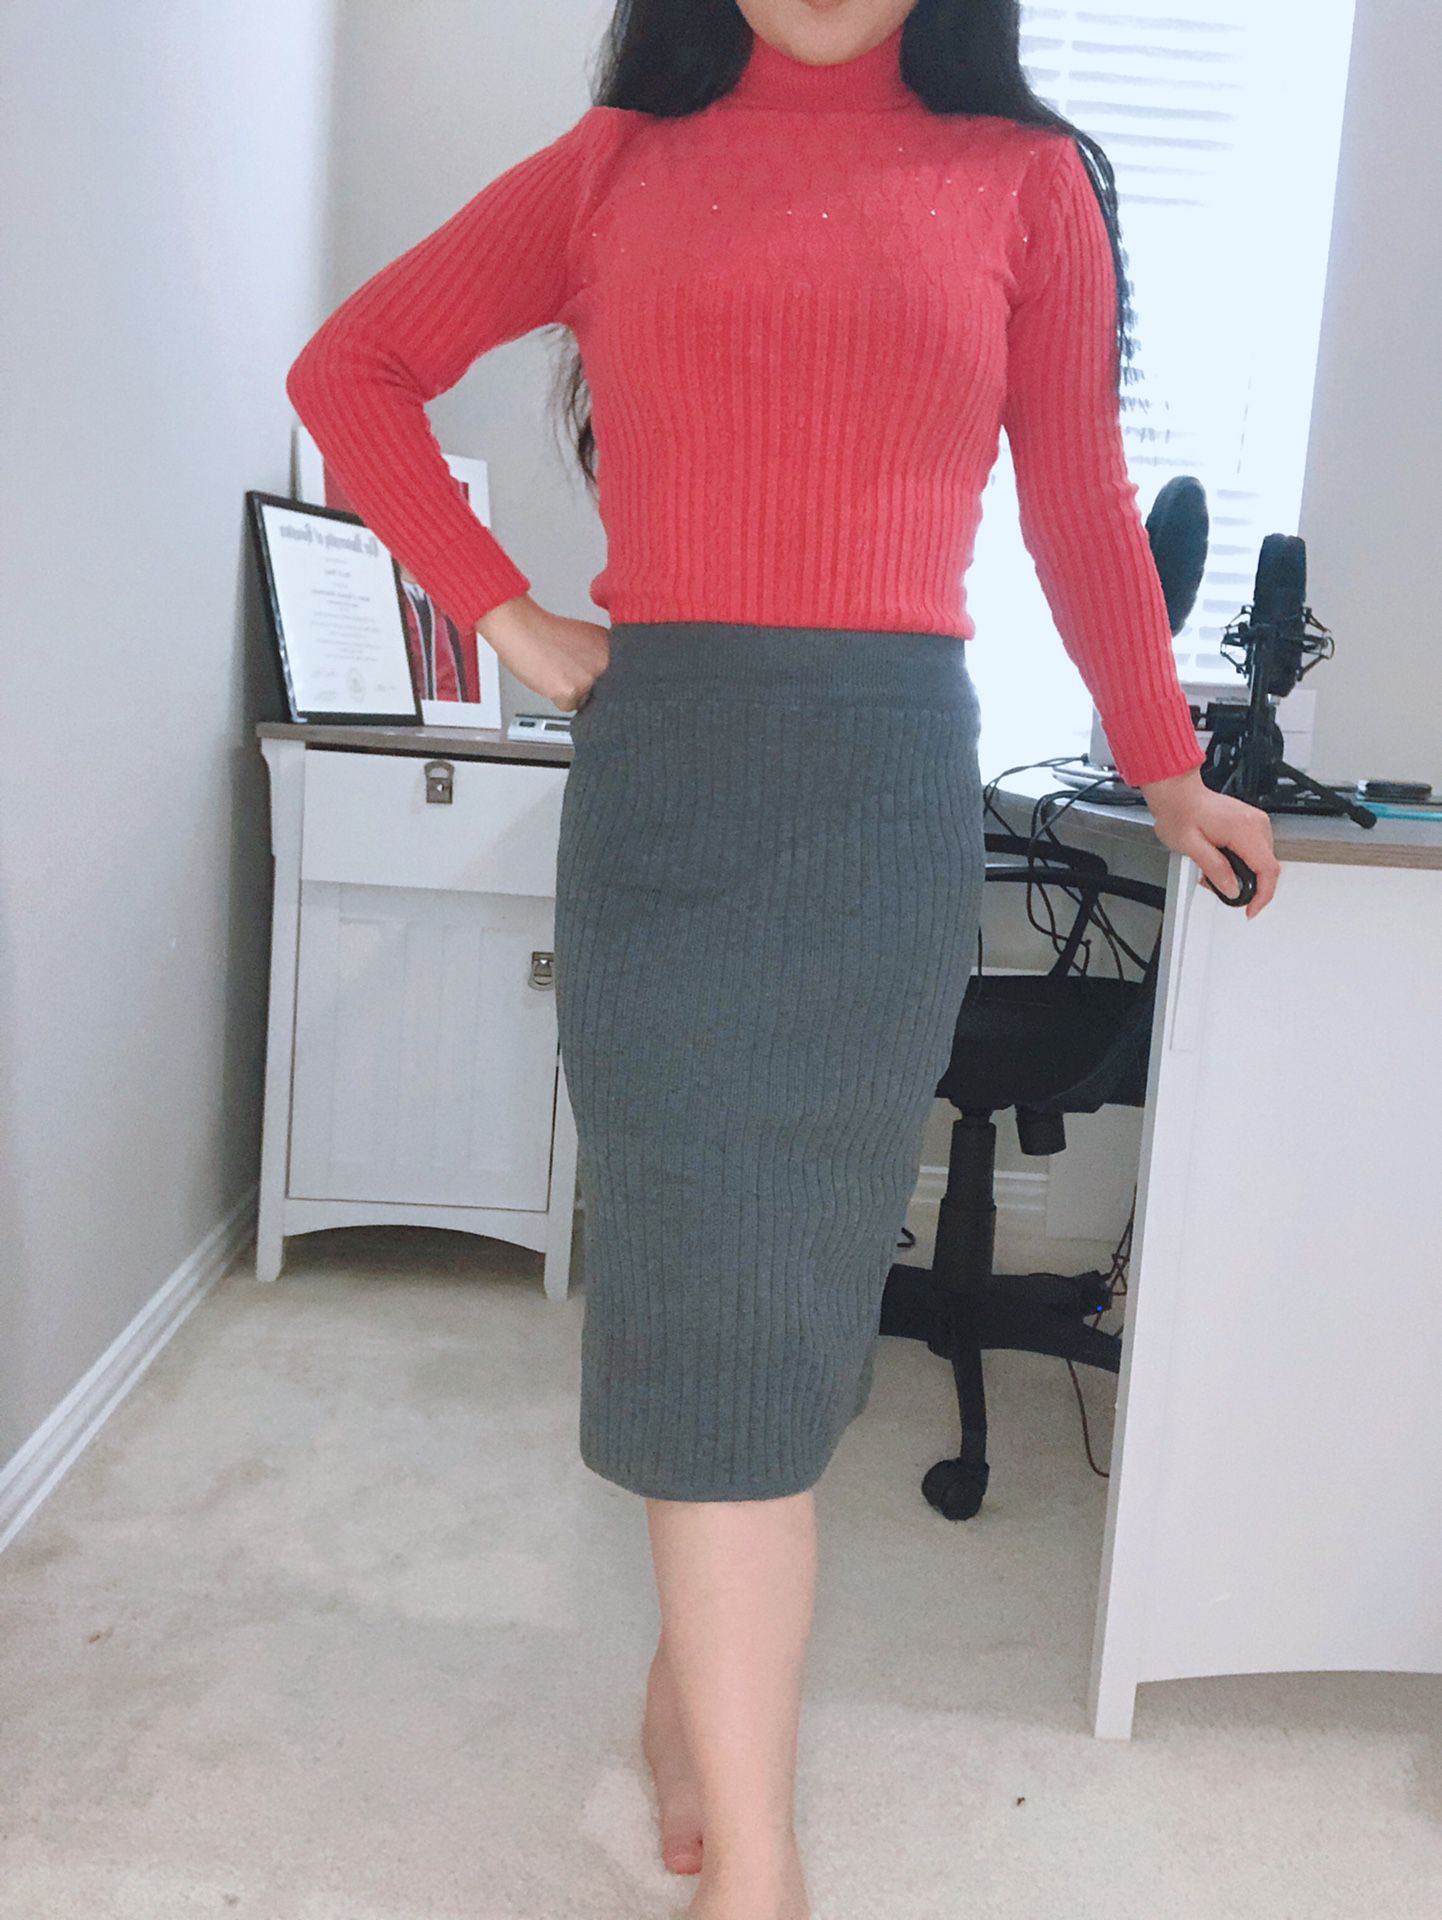 Women winter knit midi pencil office straight bodycon skirt